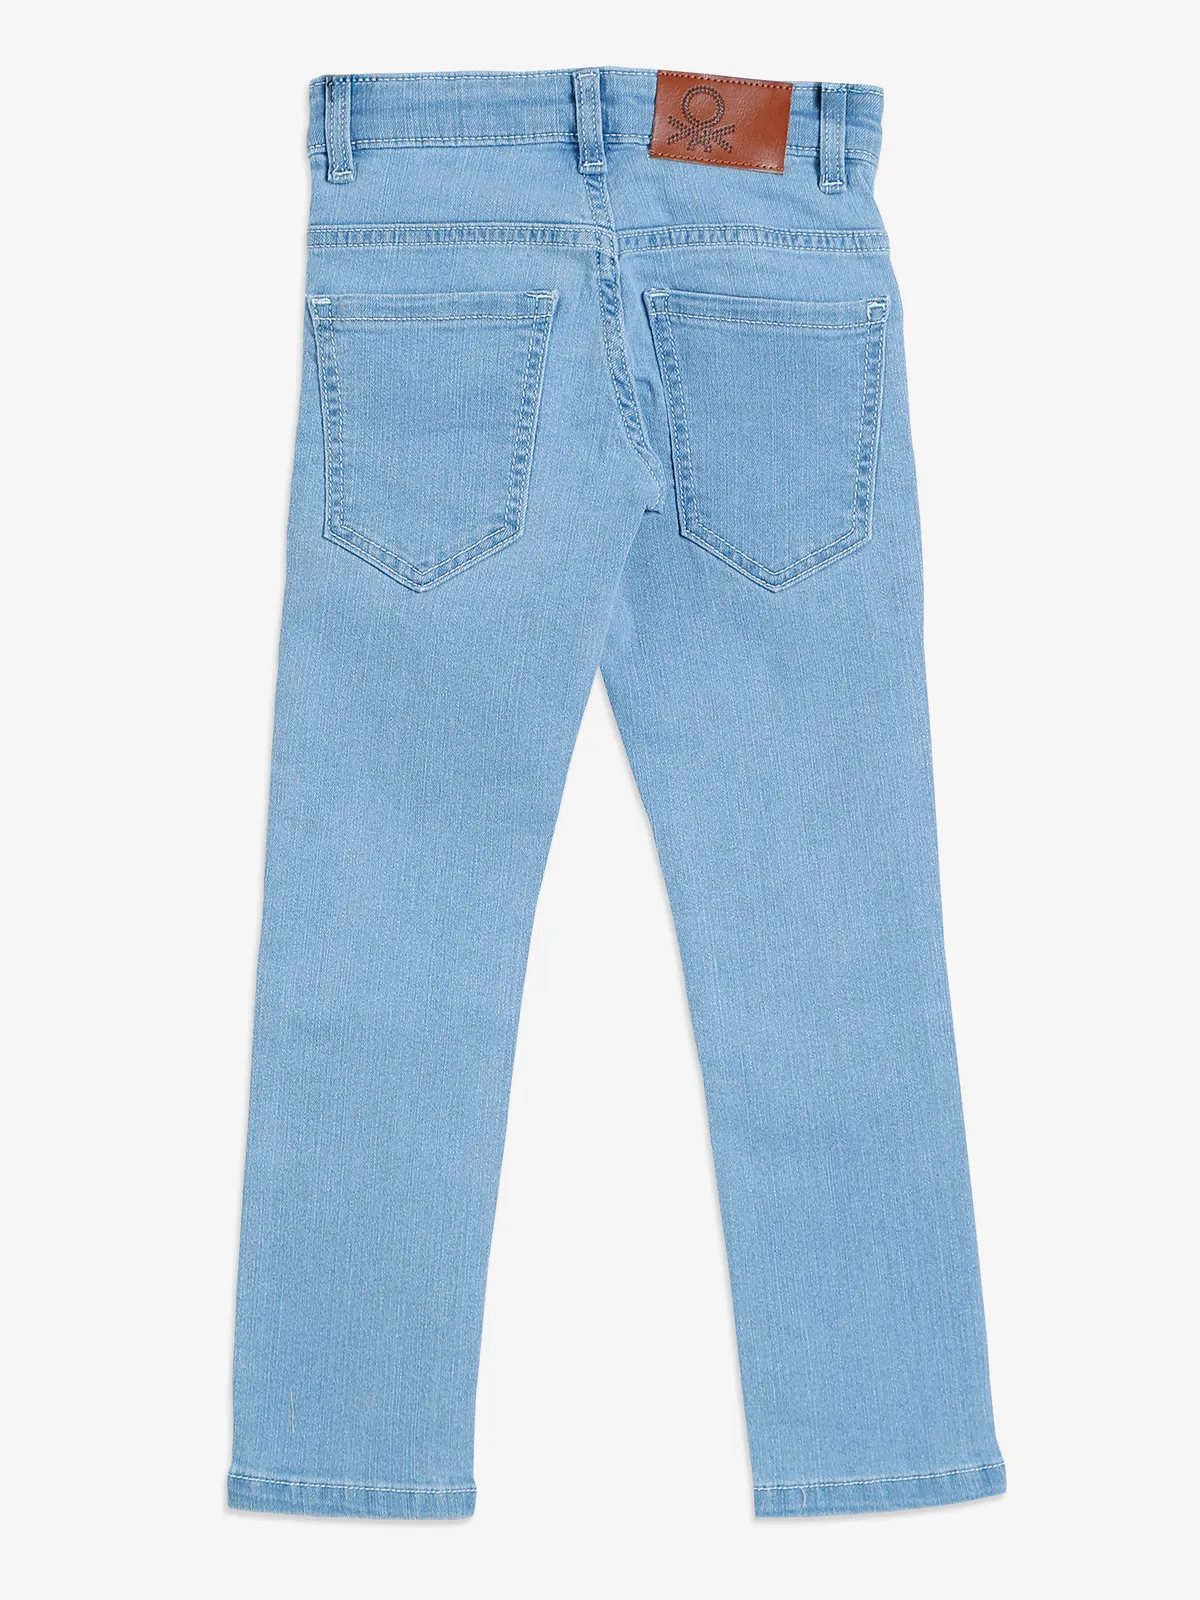 UCB light blue solid slim fit jeans